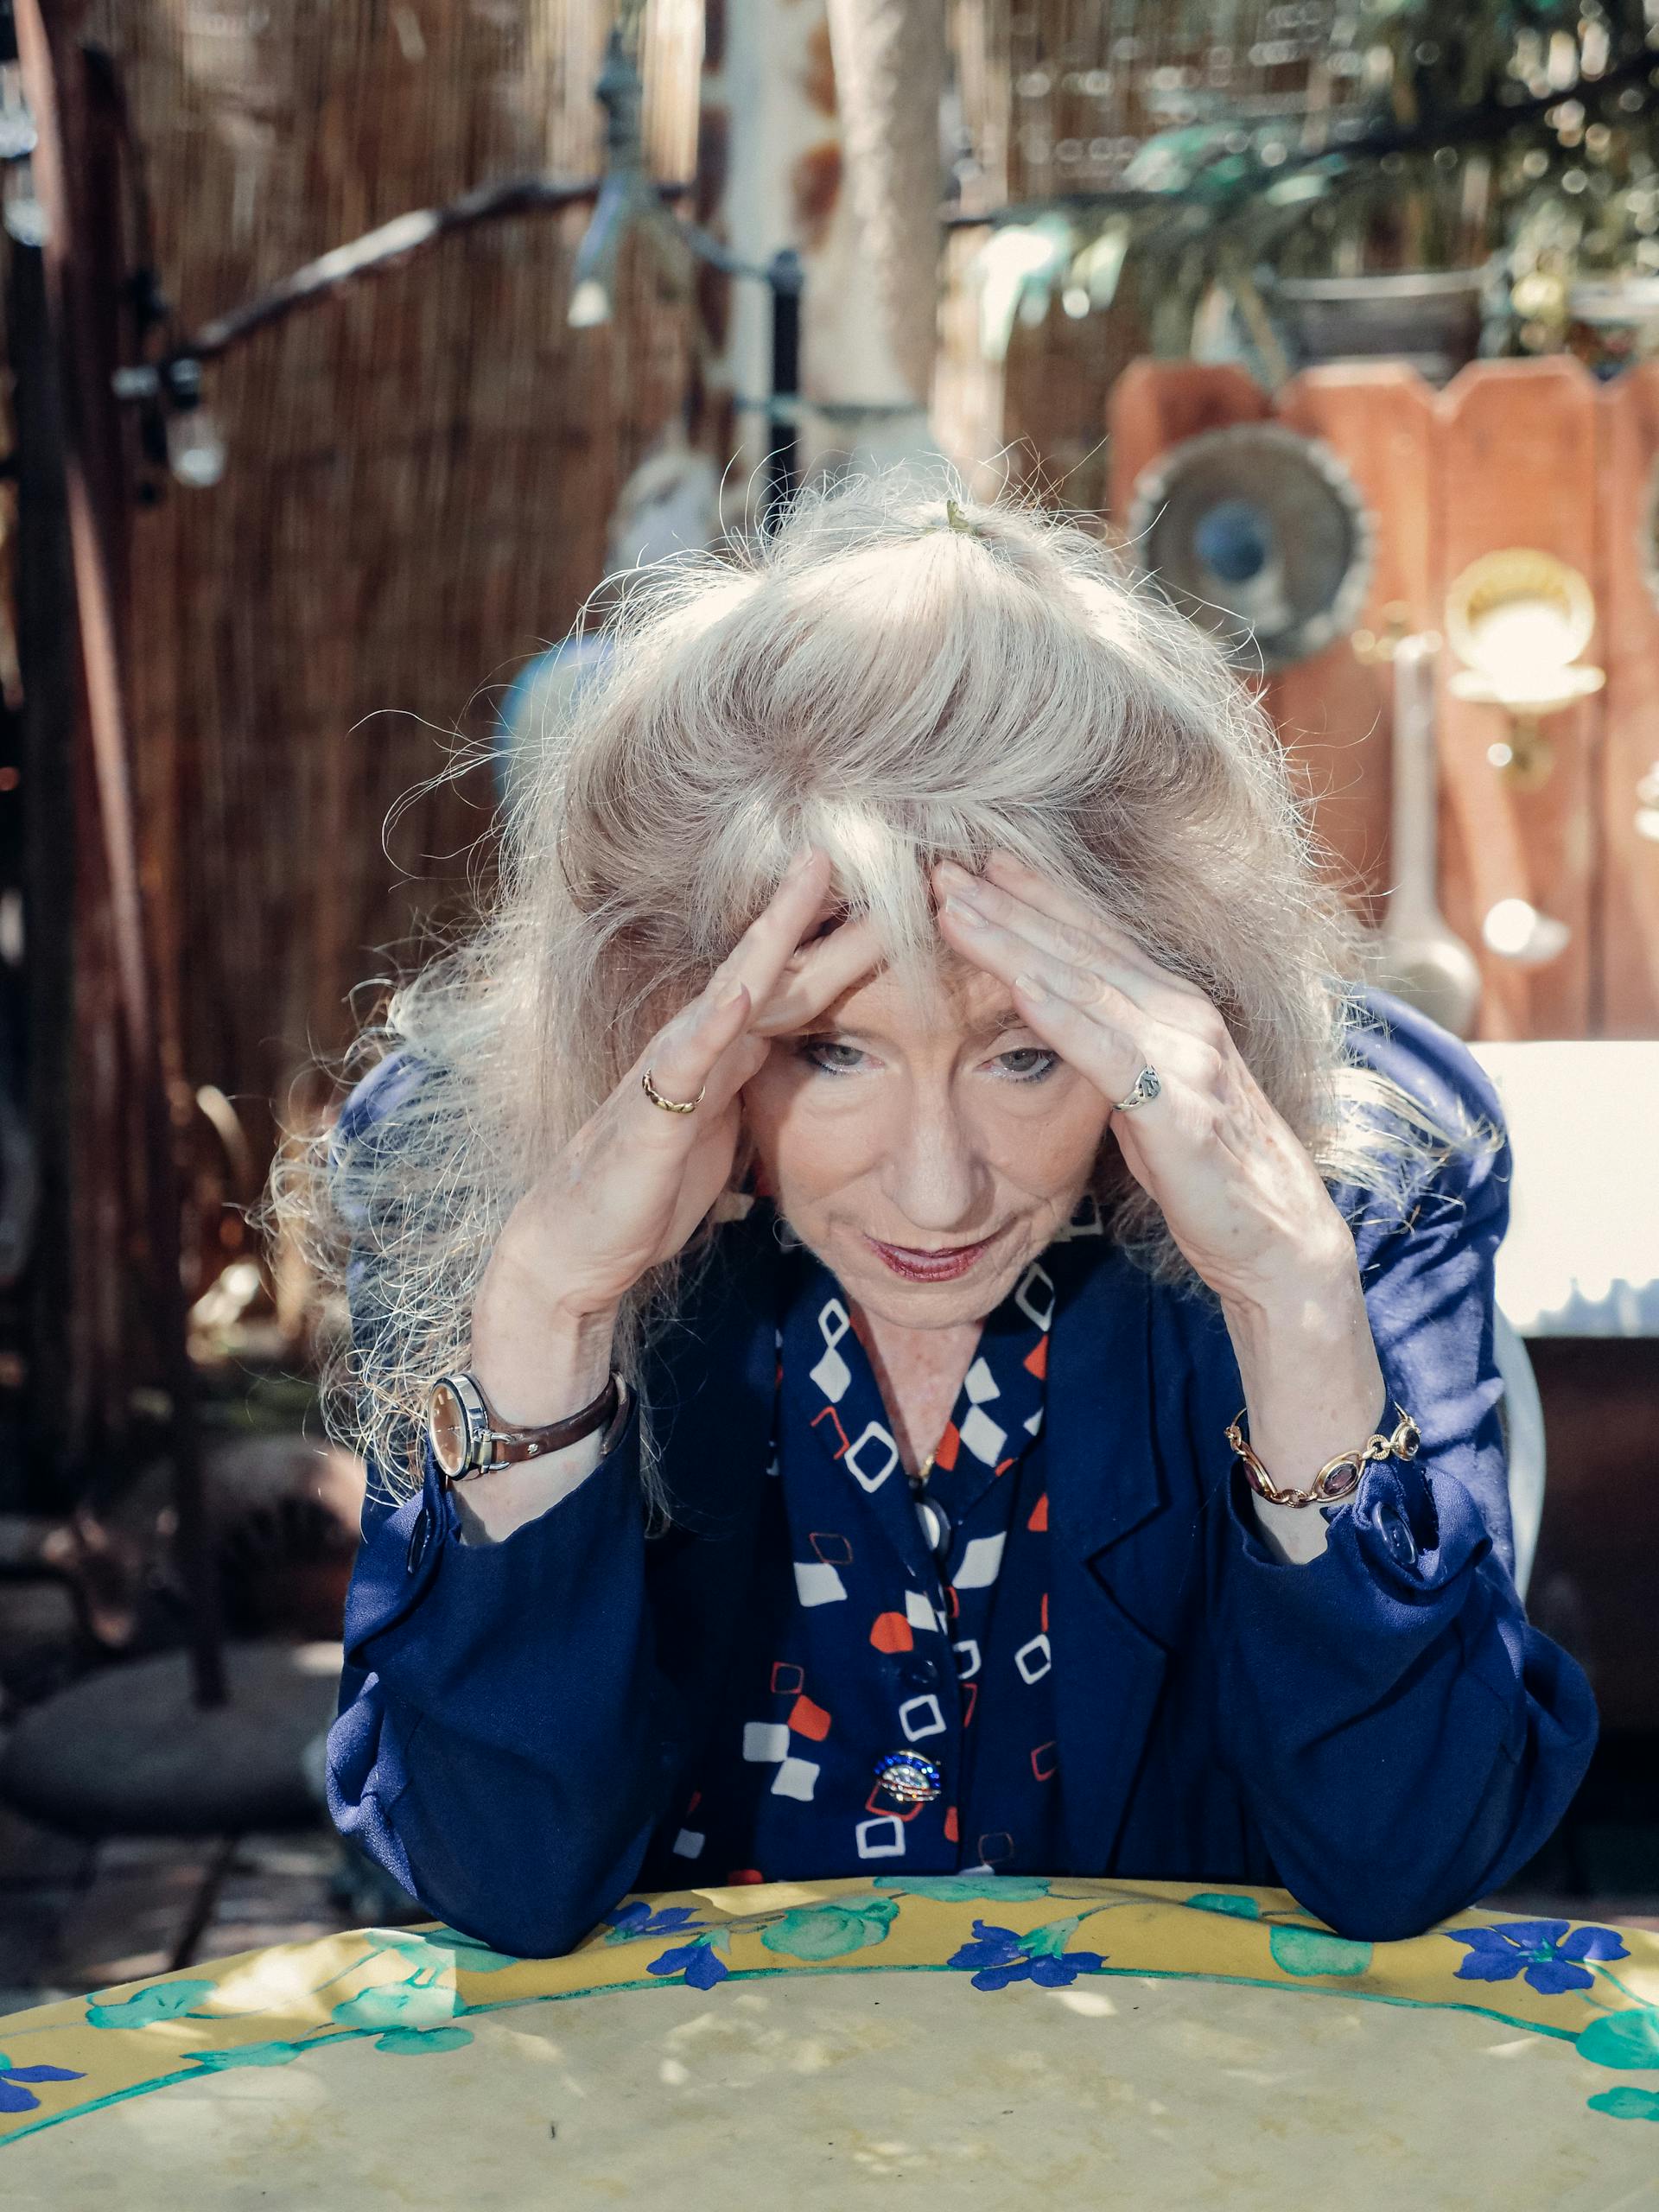 An elderly woman with her head in her hands | Source: Pexels